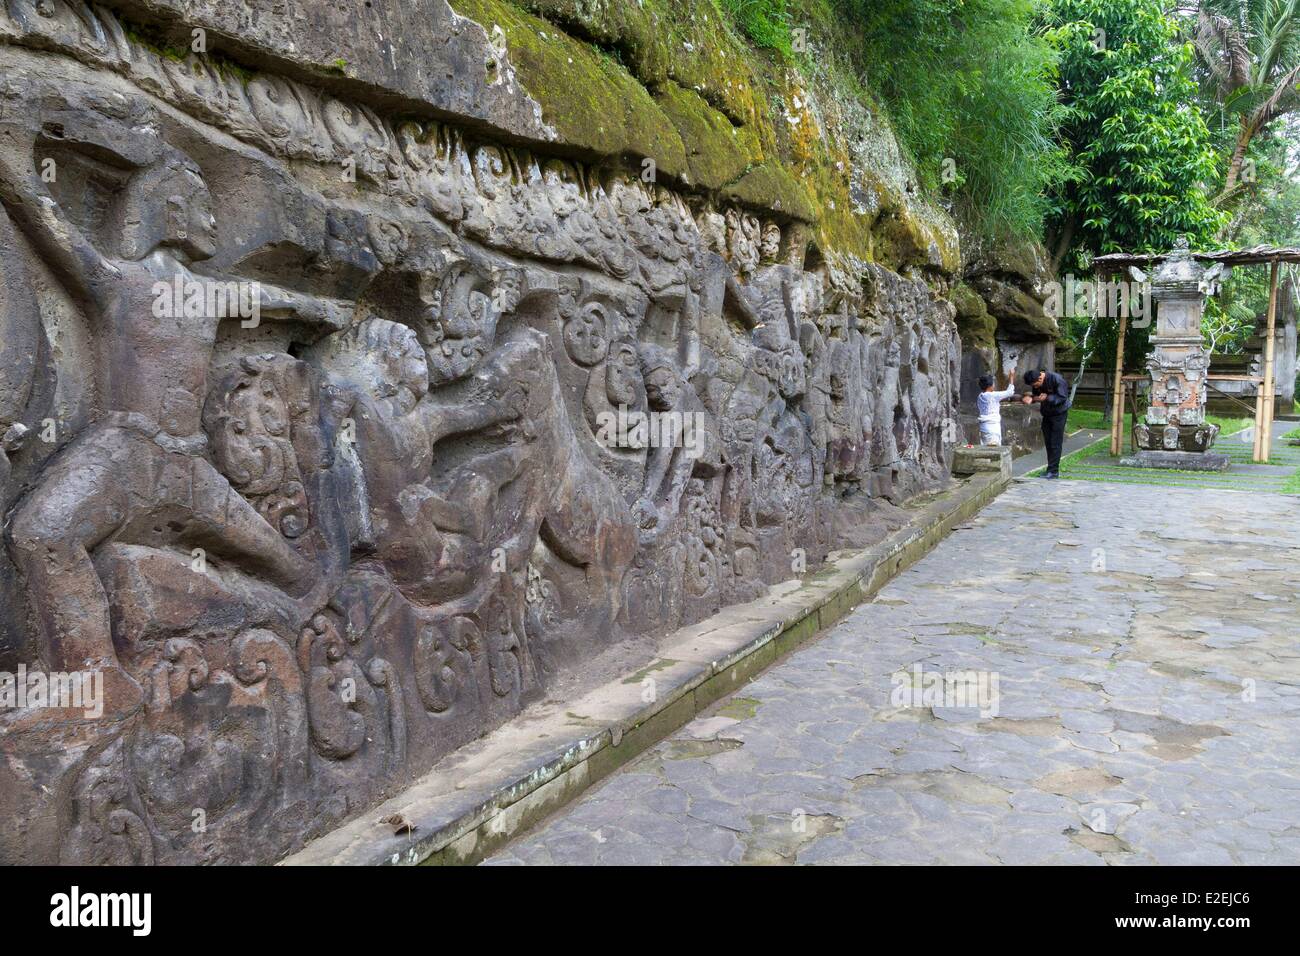 Indonesia, Bali, Bedulu, Yeh Pulu rock carvings Stock Photo